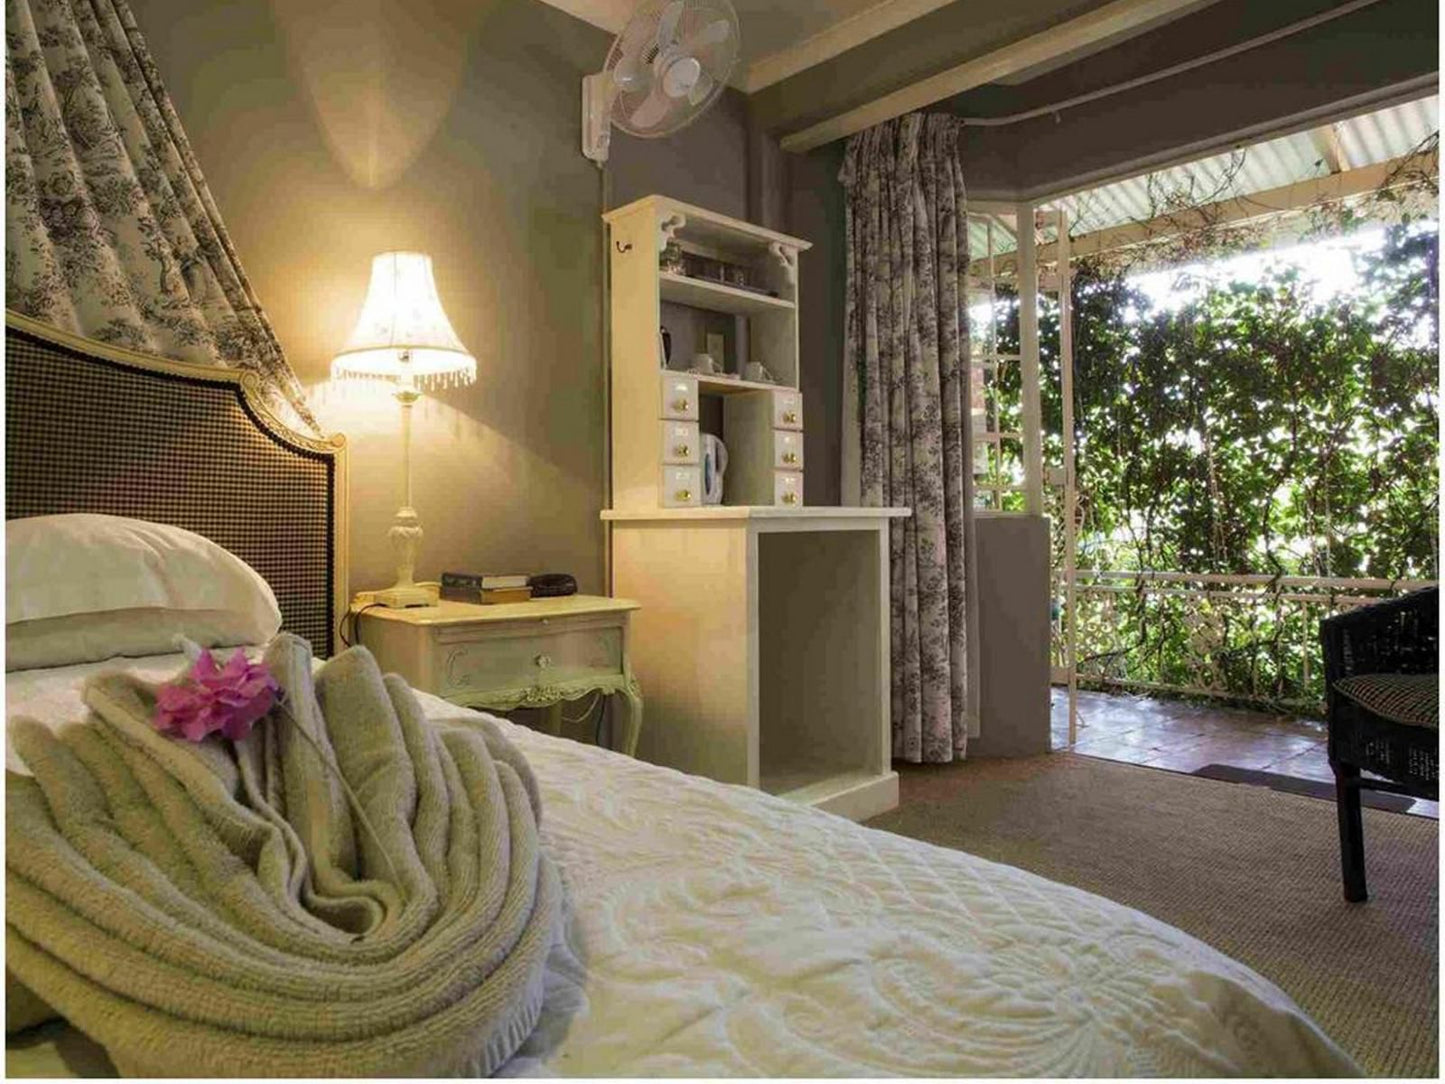 De Ark Guest House Lydenburg Mpumalanga South Africa Bedroom, Garden, Nature, Plant